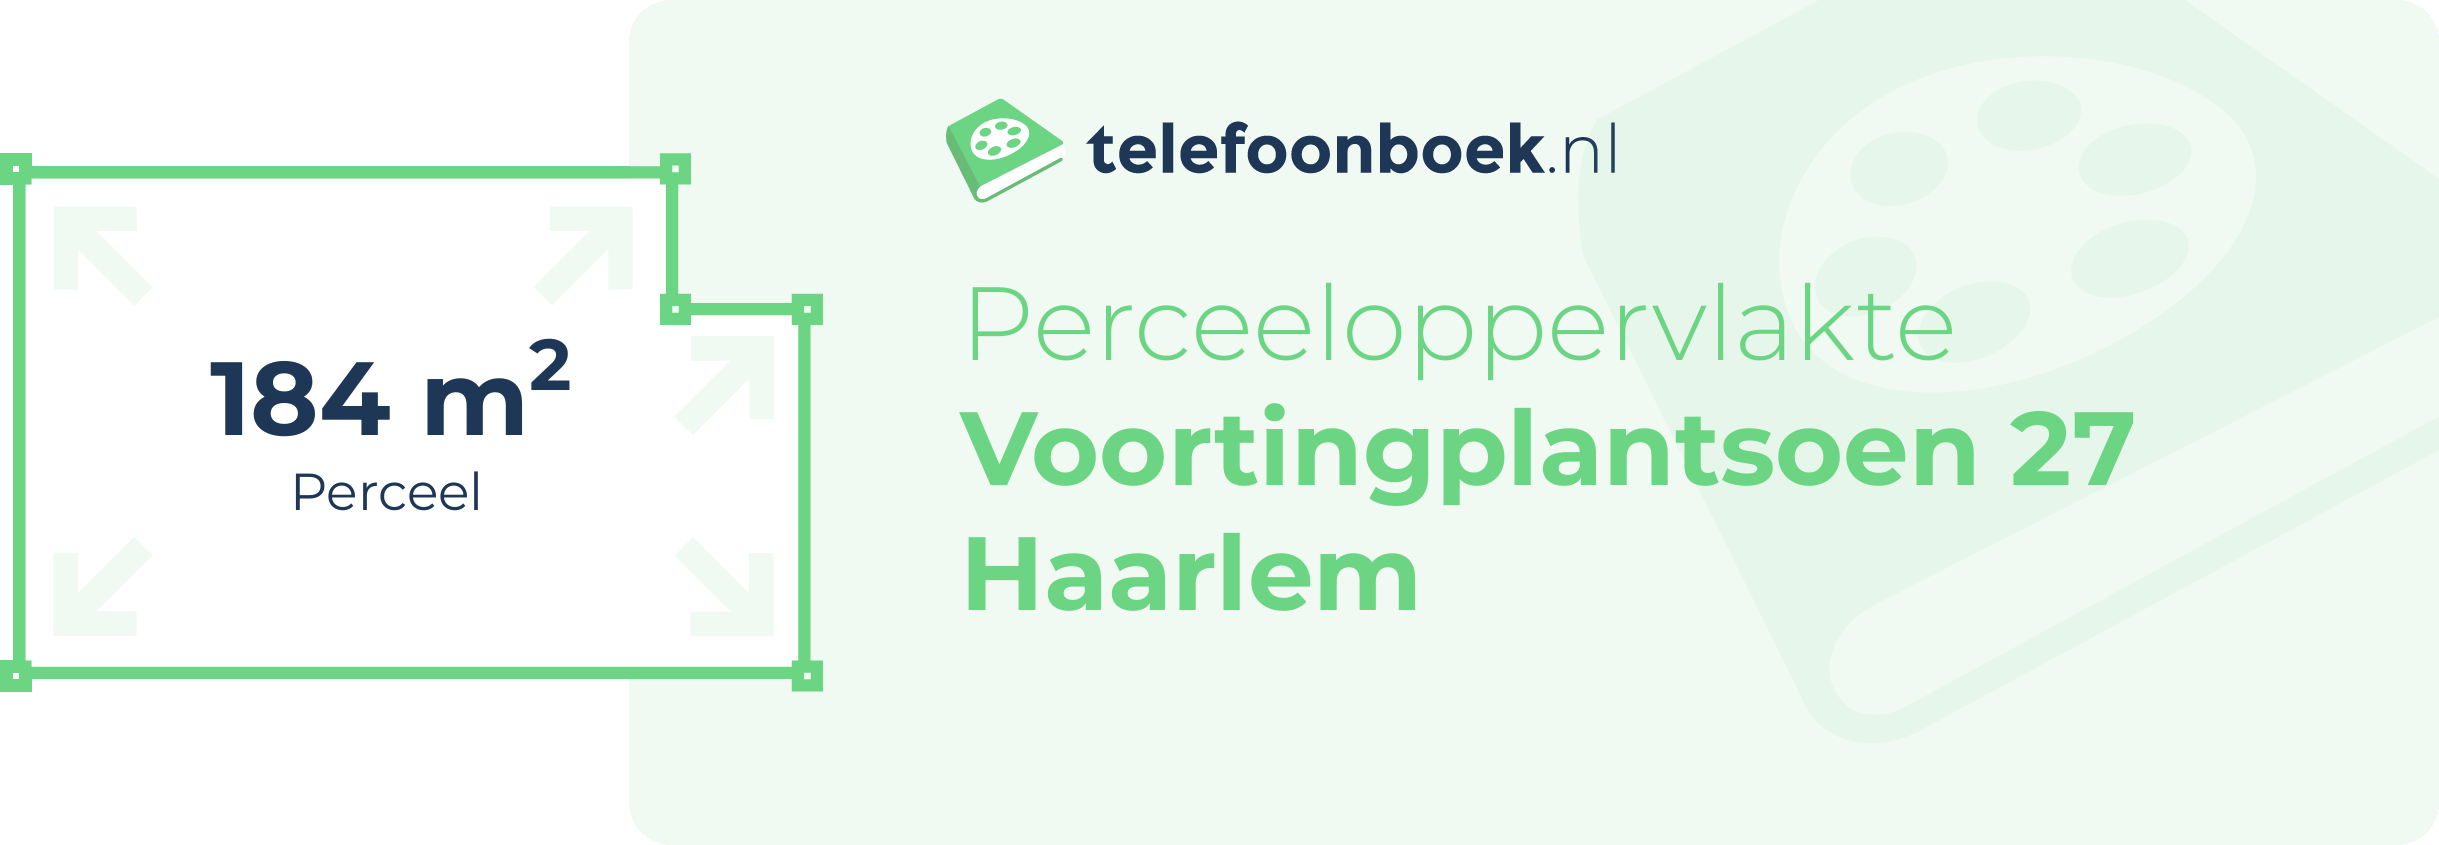 Perceeloppervlakte Voortingplantsoen 27 Haarlem